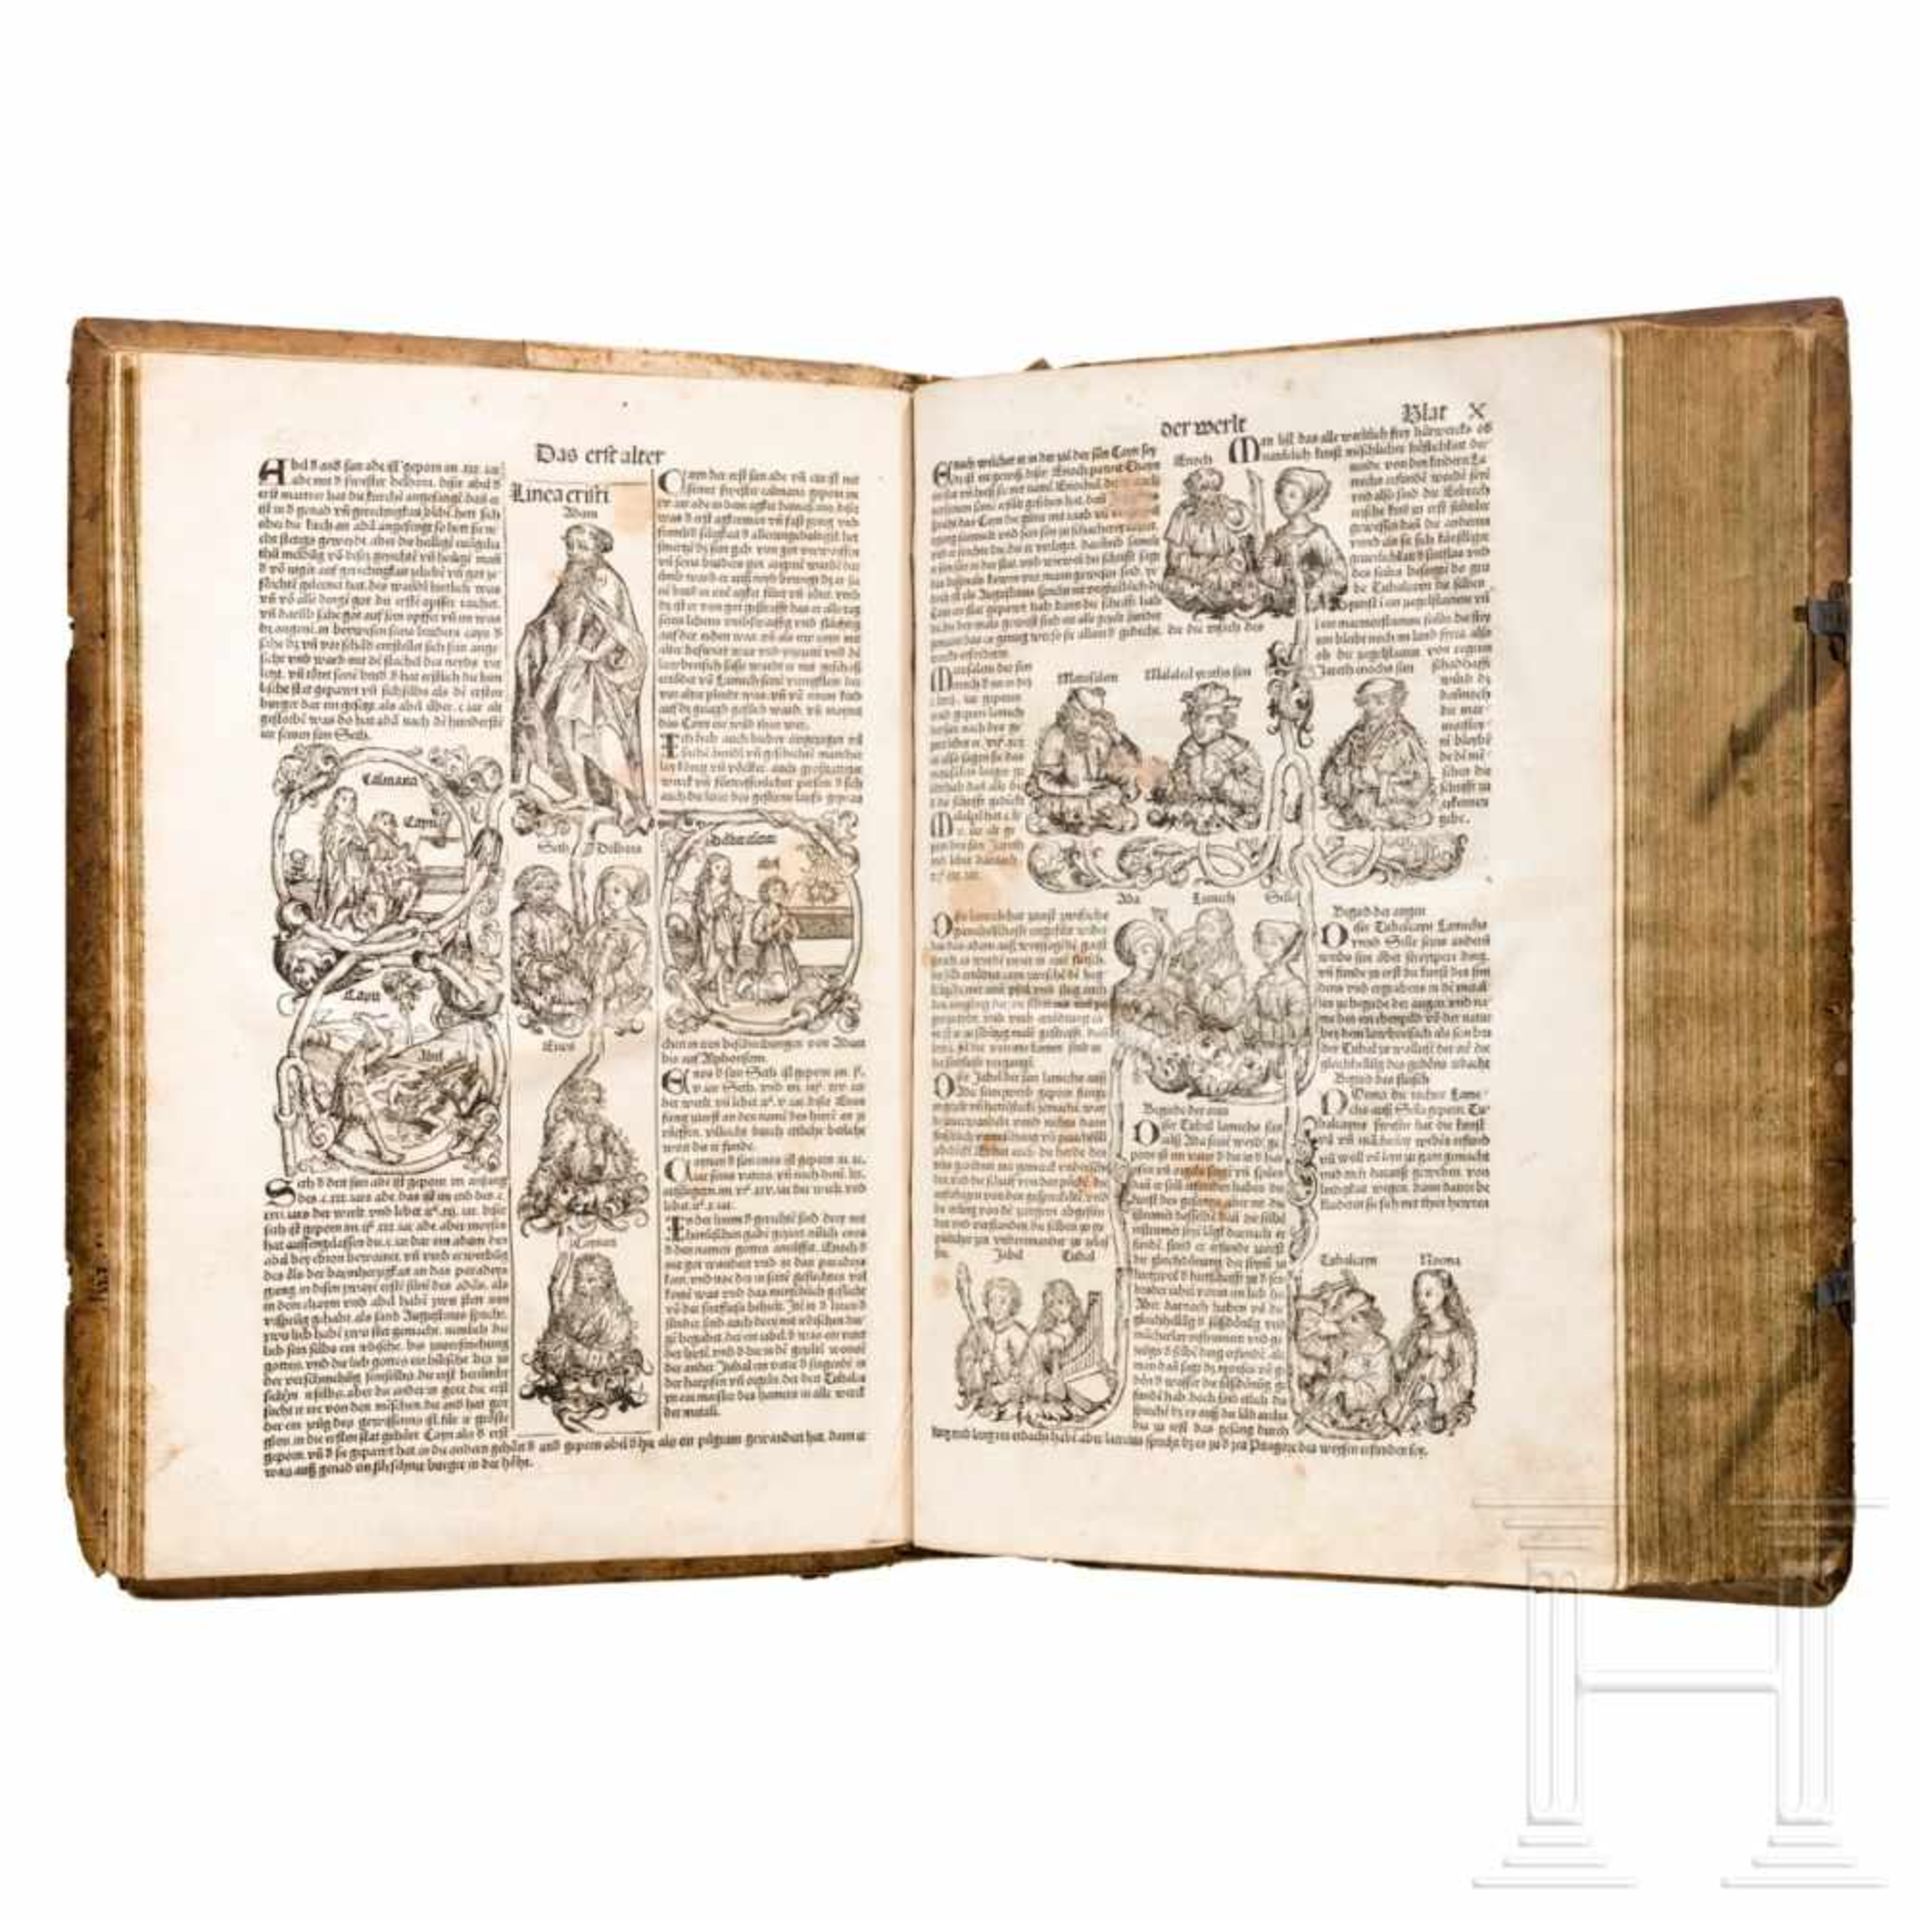 Hartmann Schedel, Das Buch der Chroniken, Nürnberg, A. Koberger, 1493 - Bild 40 aus 51